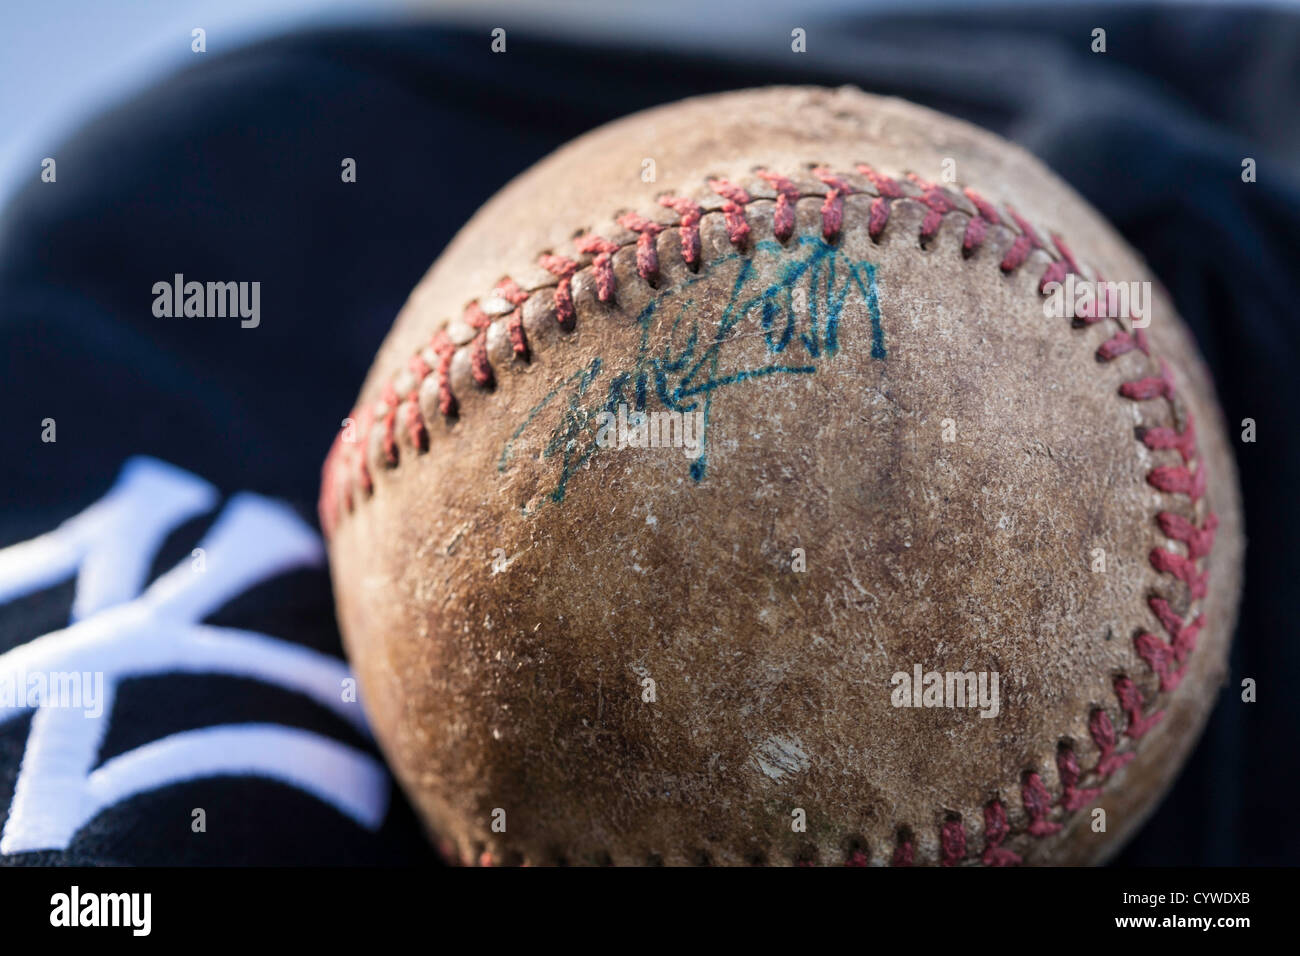 Babe Ruth & Hank Aaron Autographed Baseball